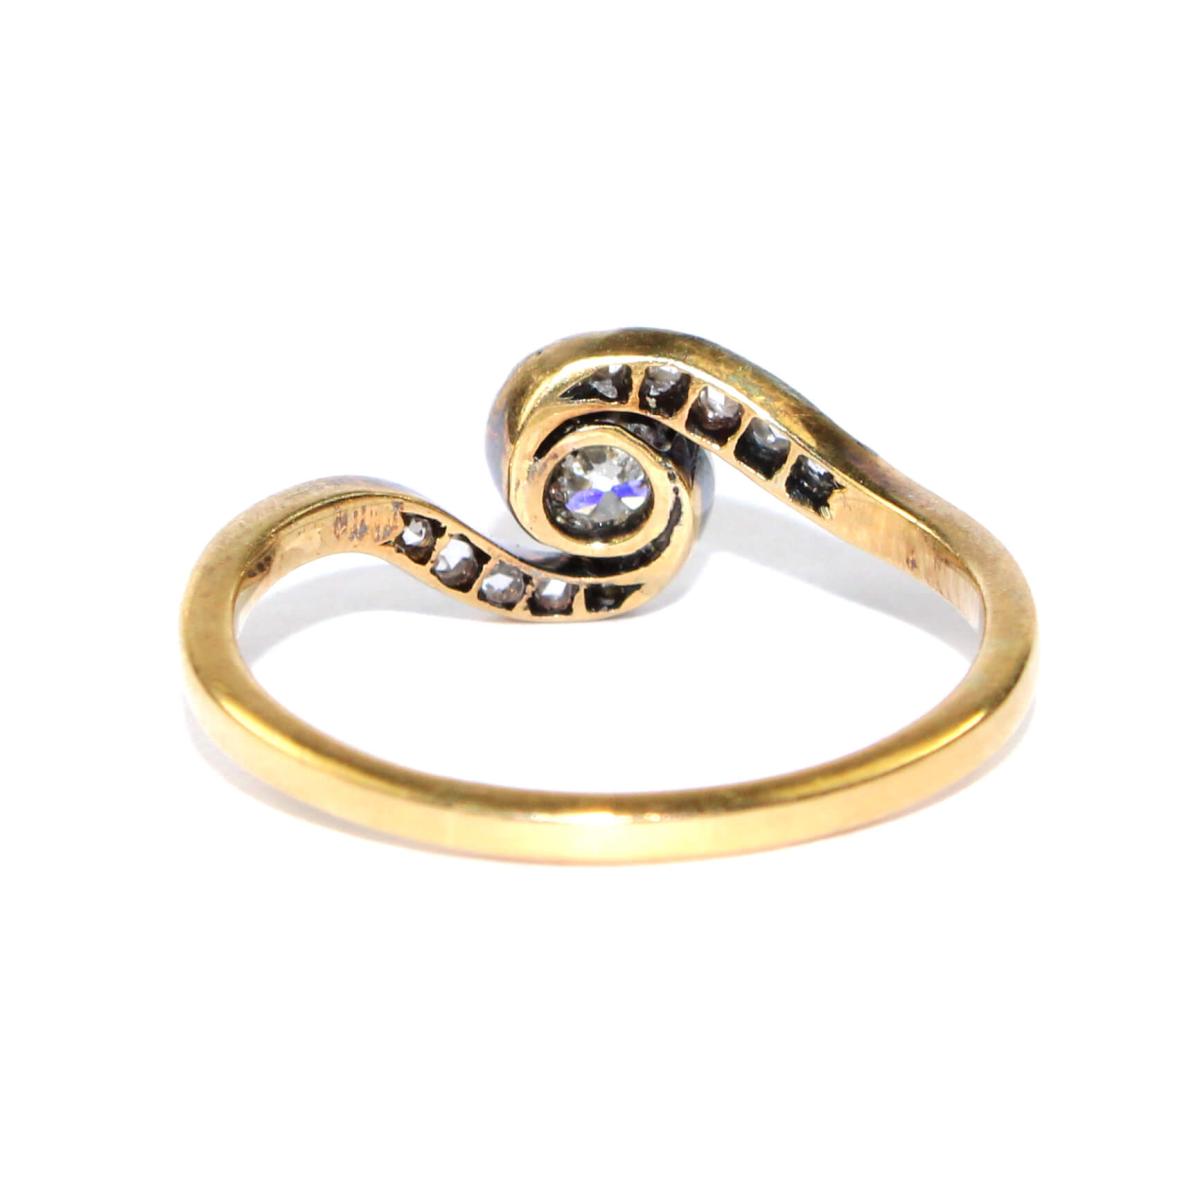 Edwardian Diamond Swirl Ring circa 1910